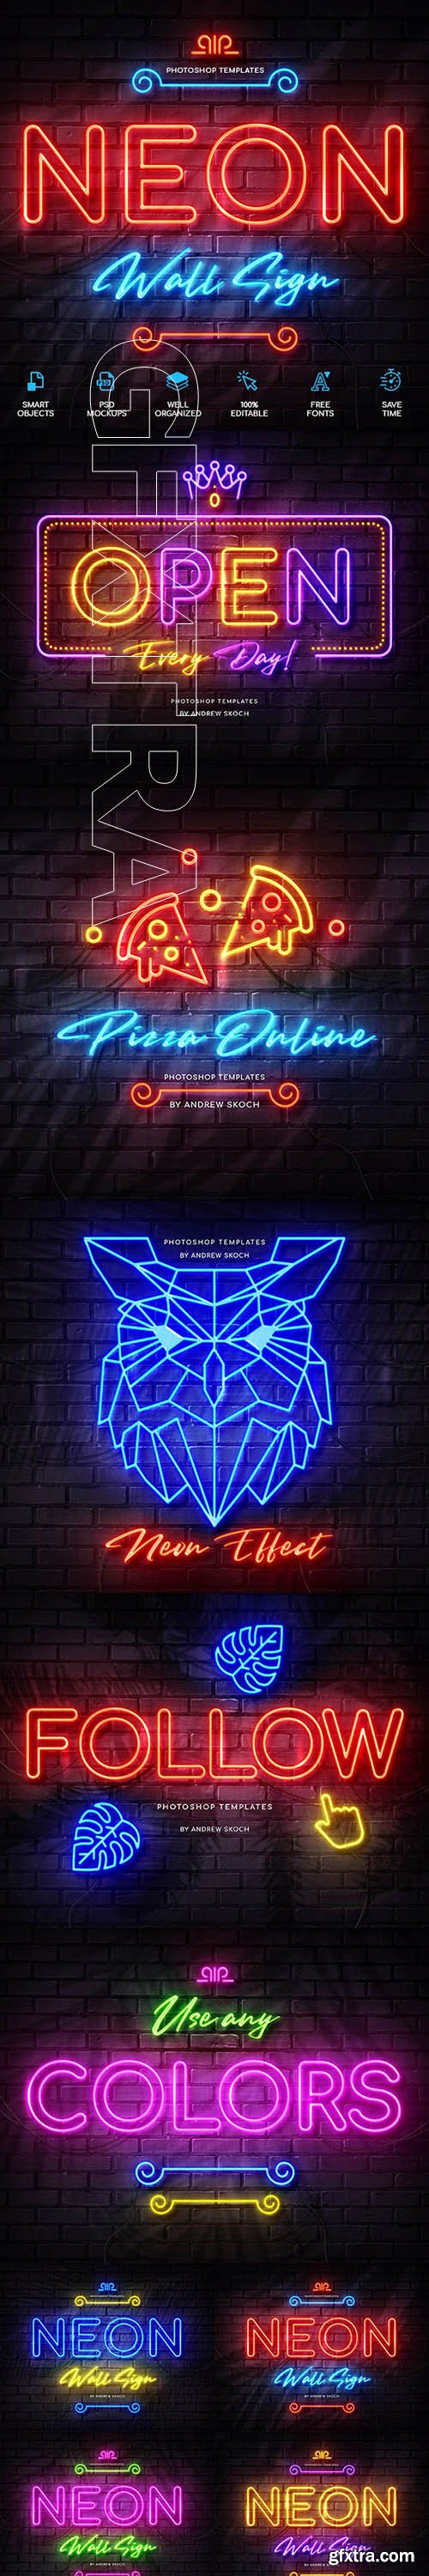 GraphicRiver Neon Wall Sign Creator 26127266 GFxtra